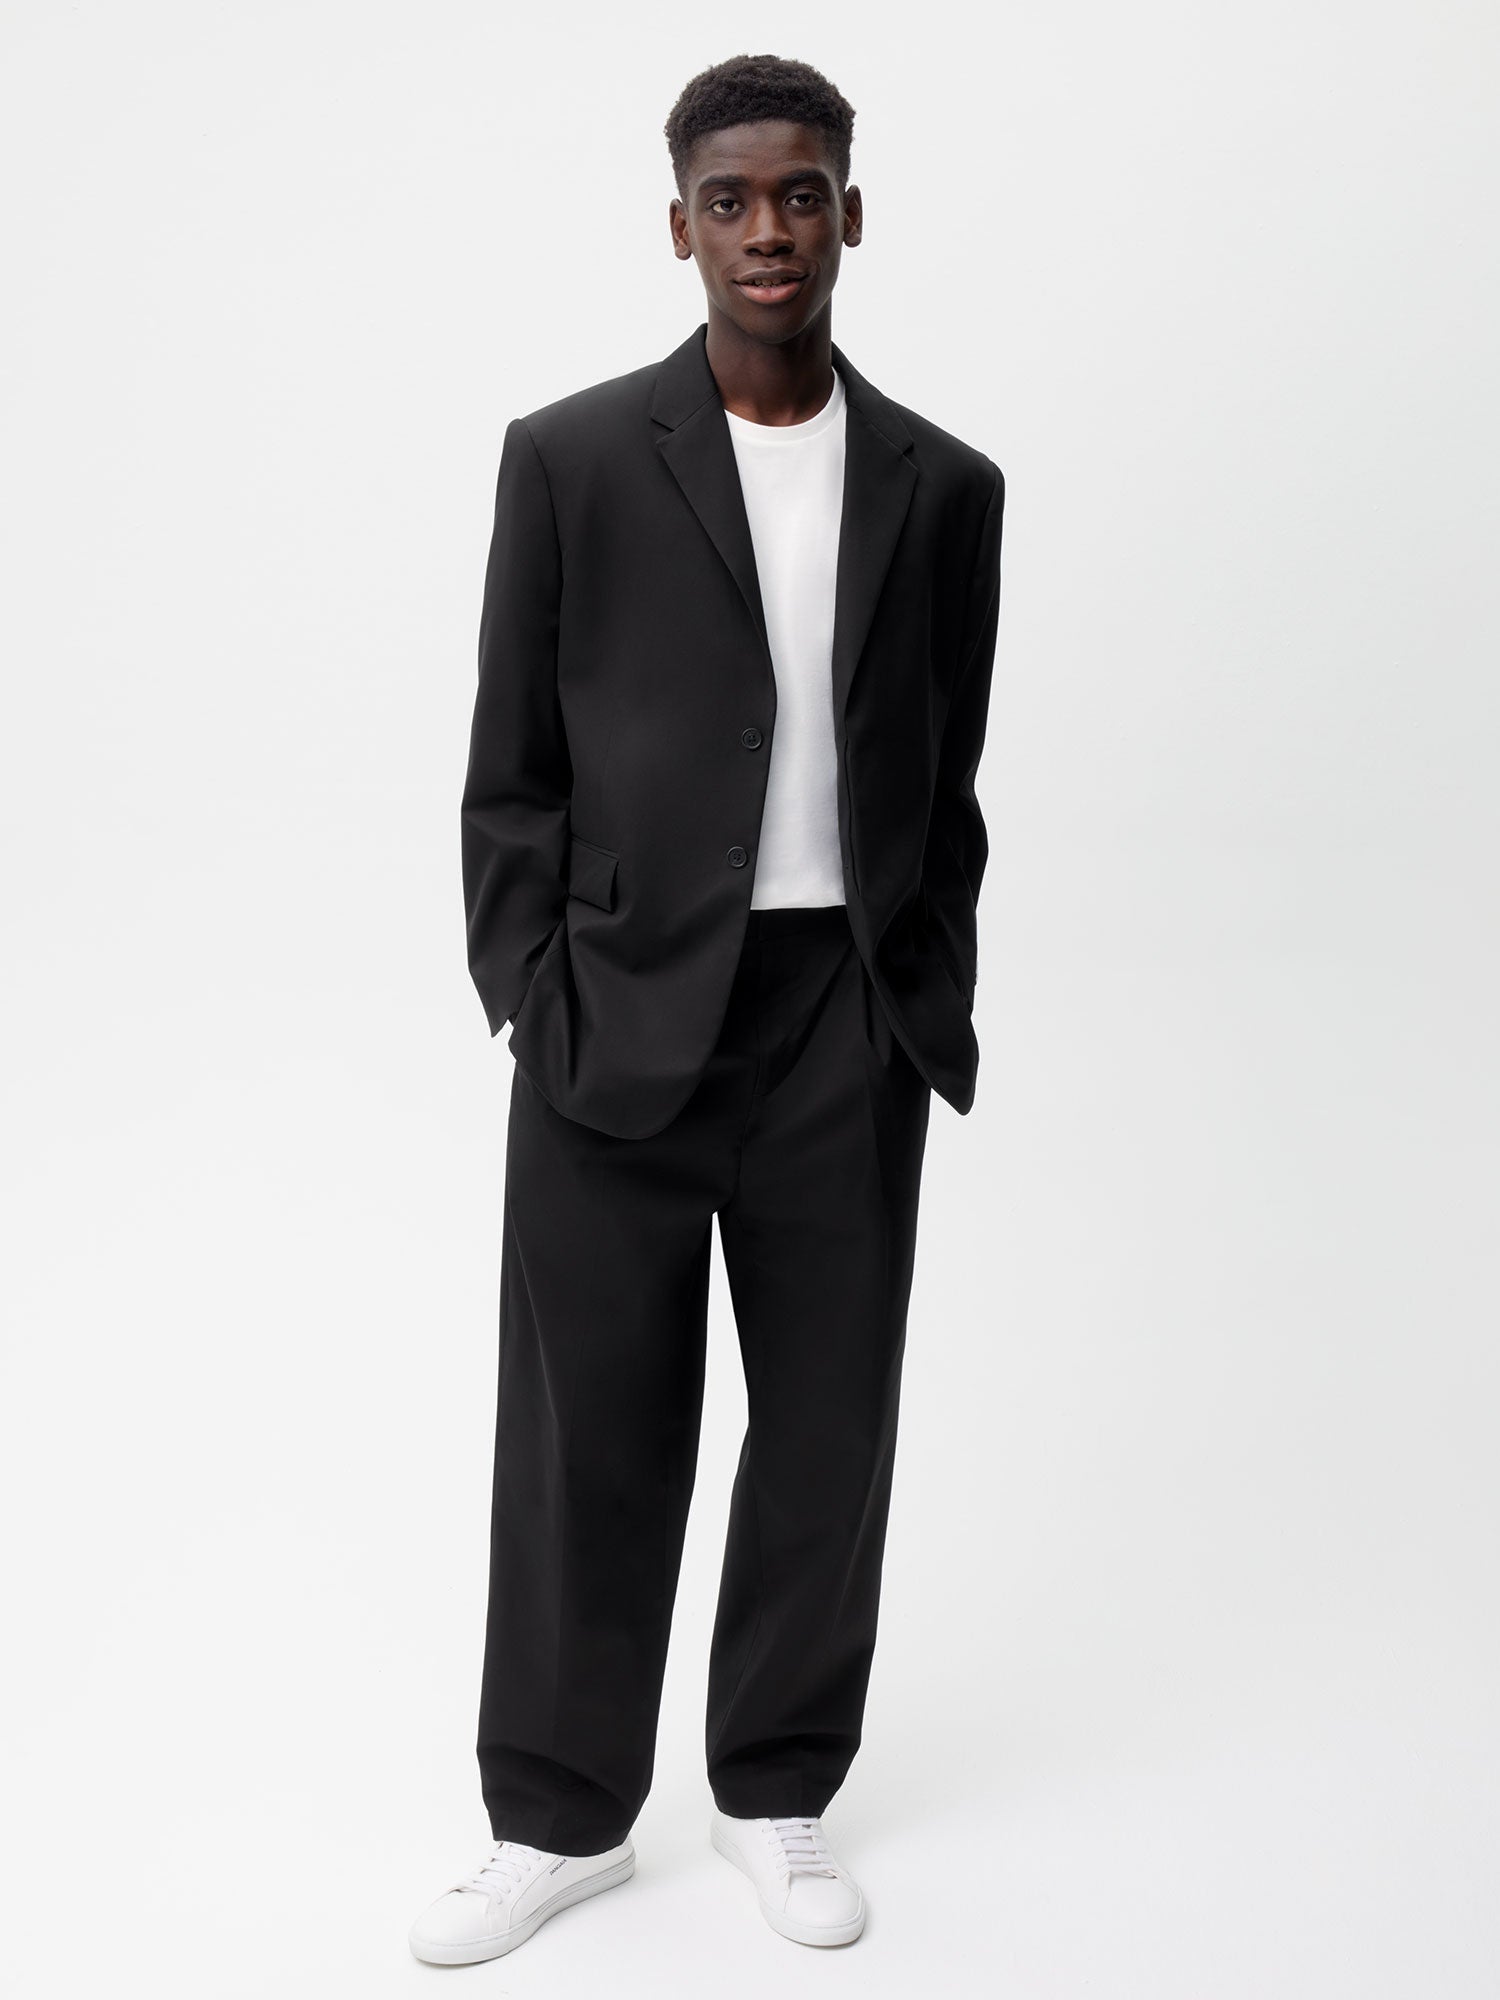 Eileen Fisher Medium Pants Crop Black Trousers Organic Cotton S2KO-4 Size M  | eBay